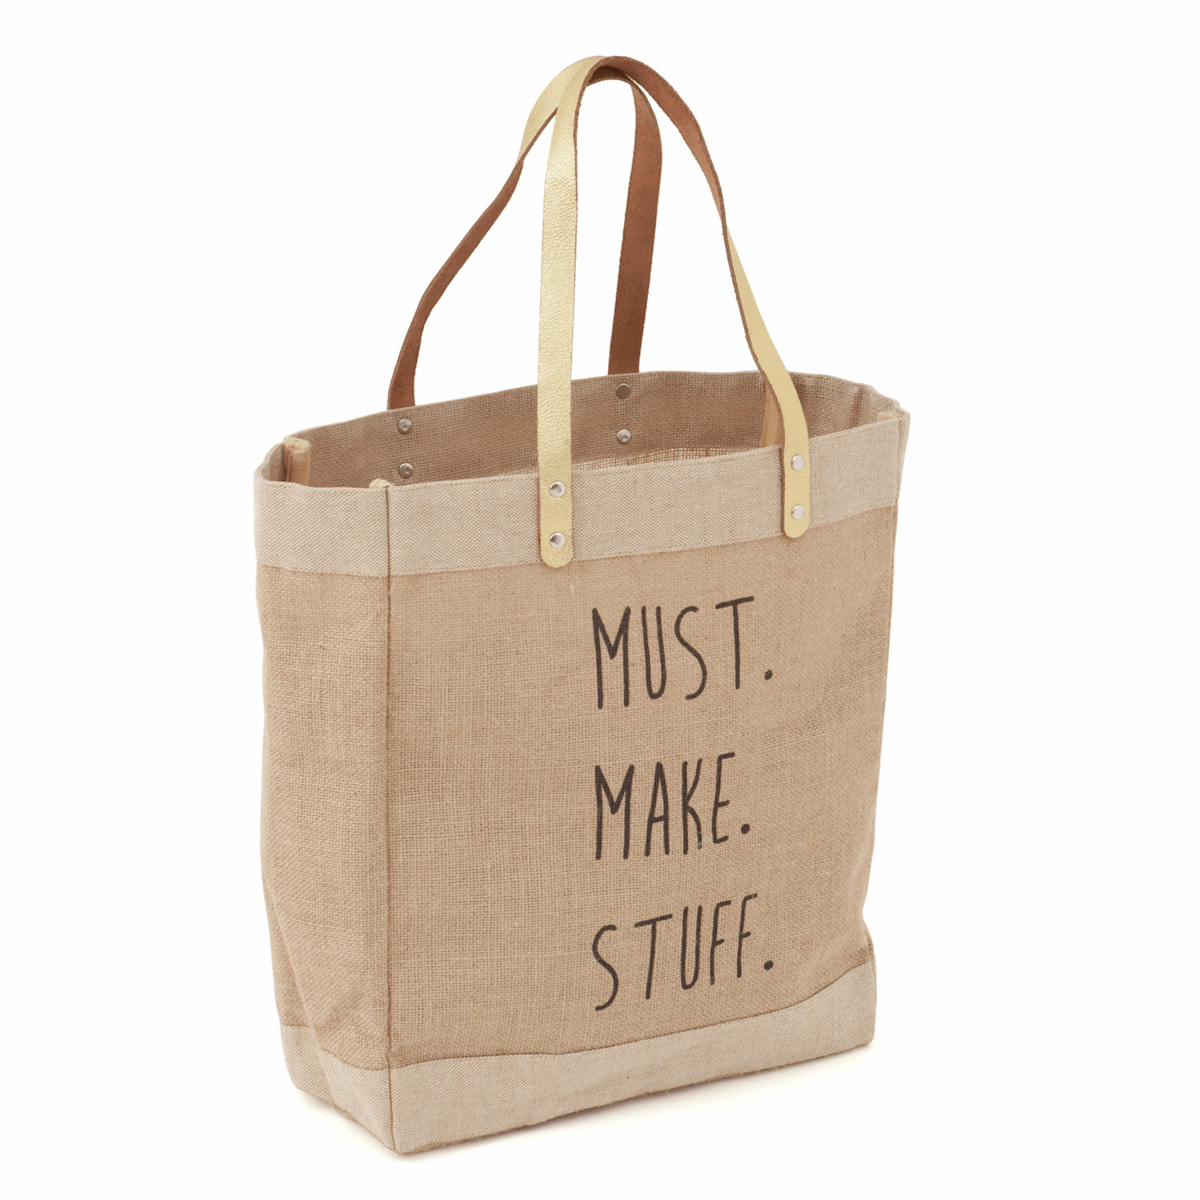 Craft Tote Bag - Must Make Stuff (Medium)